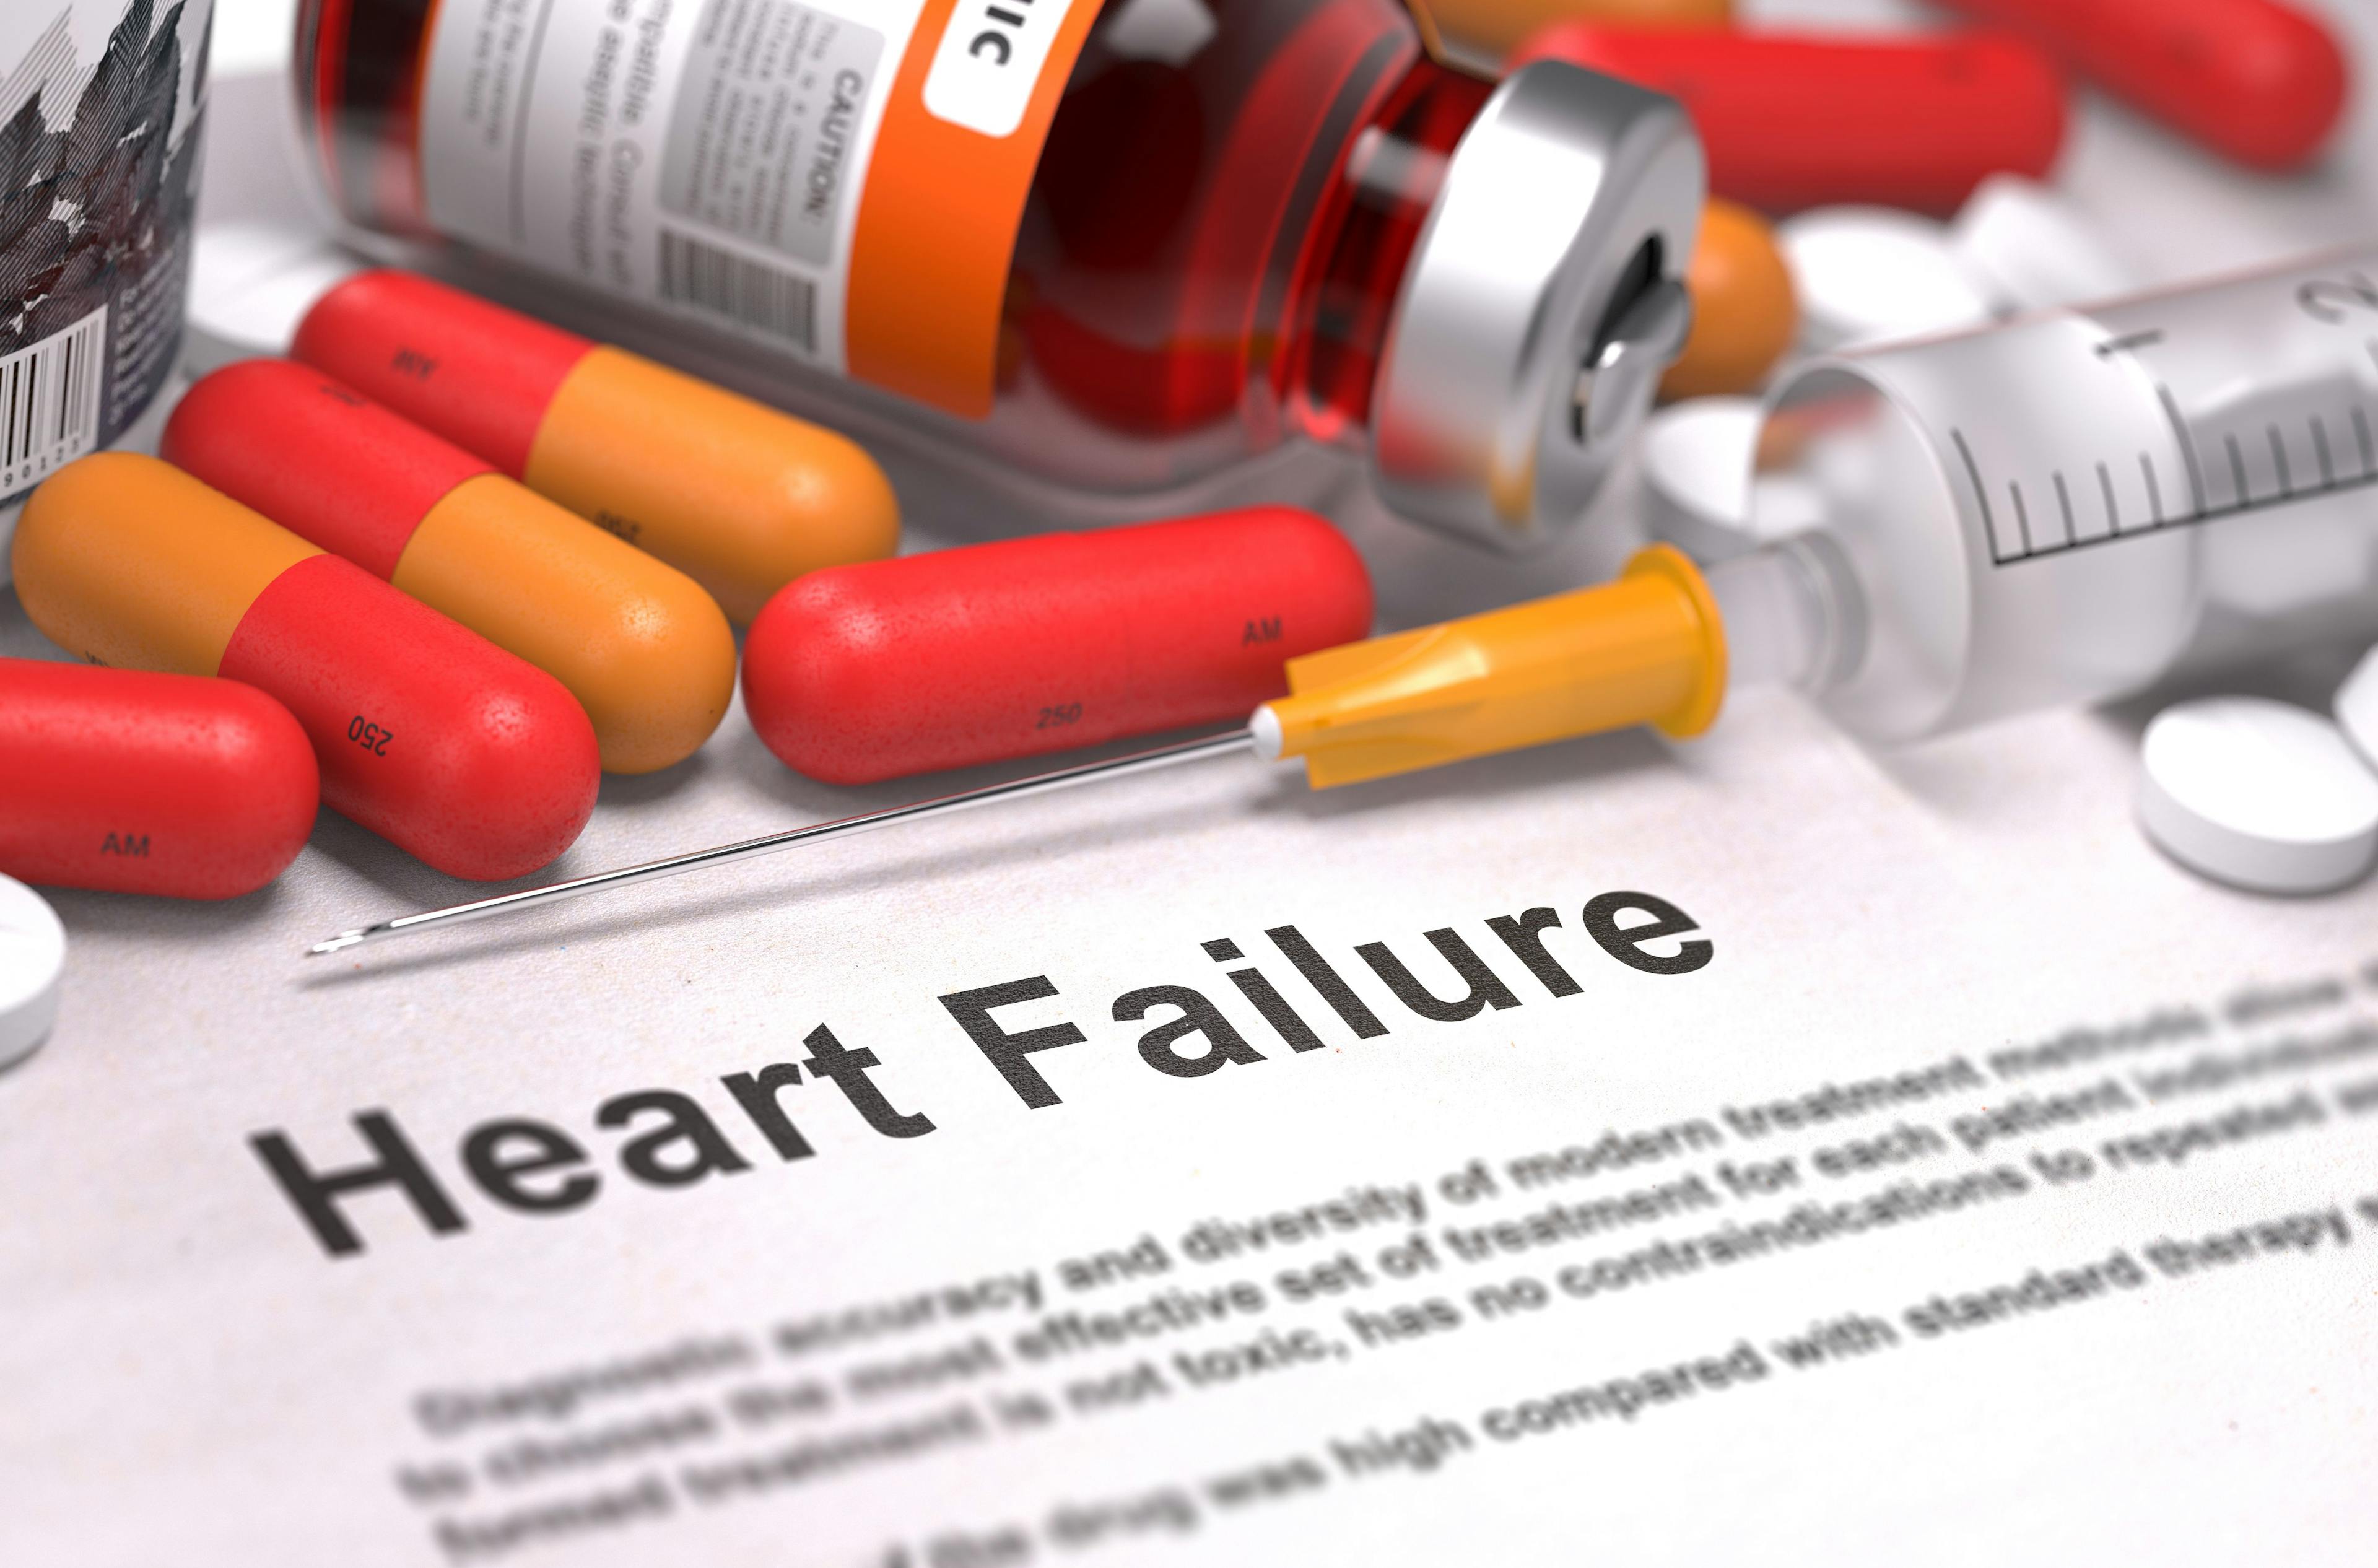 Heart Failure Diagnosis. Medical Concept | Image Credit: tashatuvango - stock.adobe.com